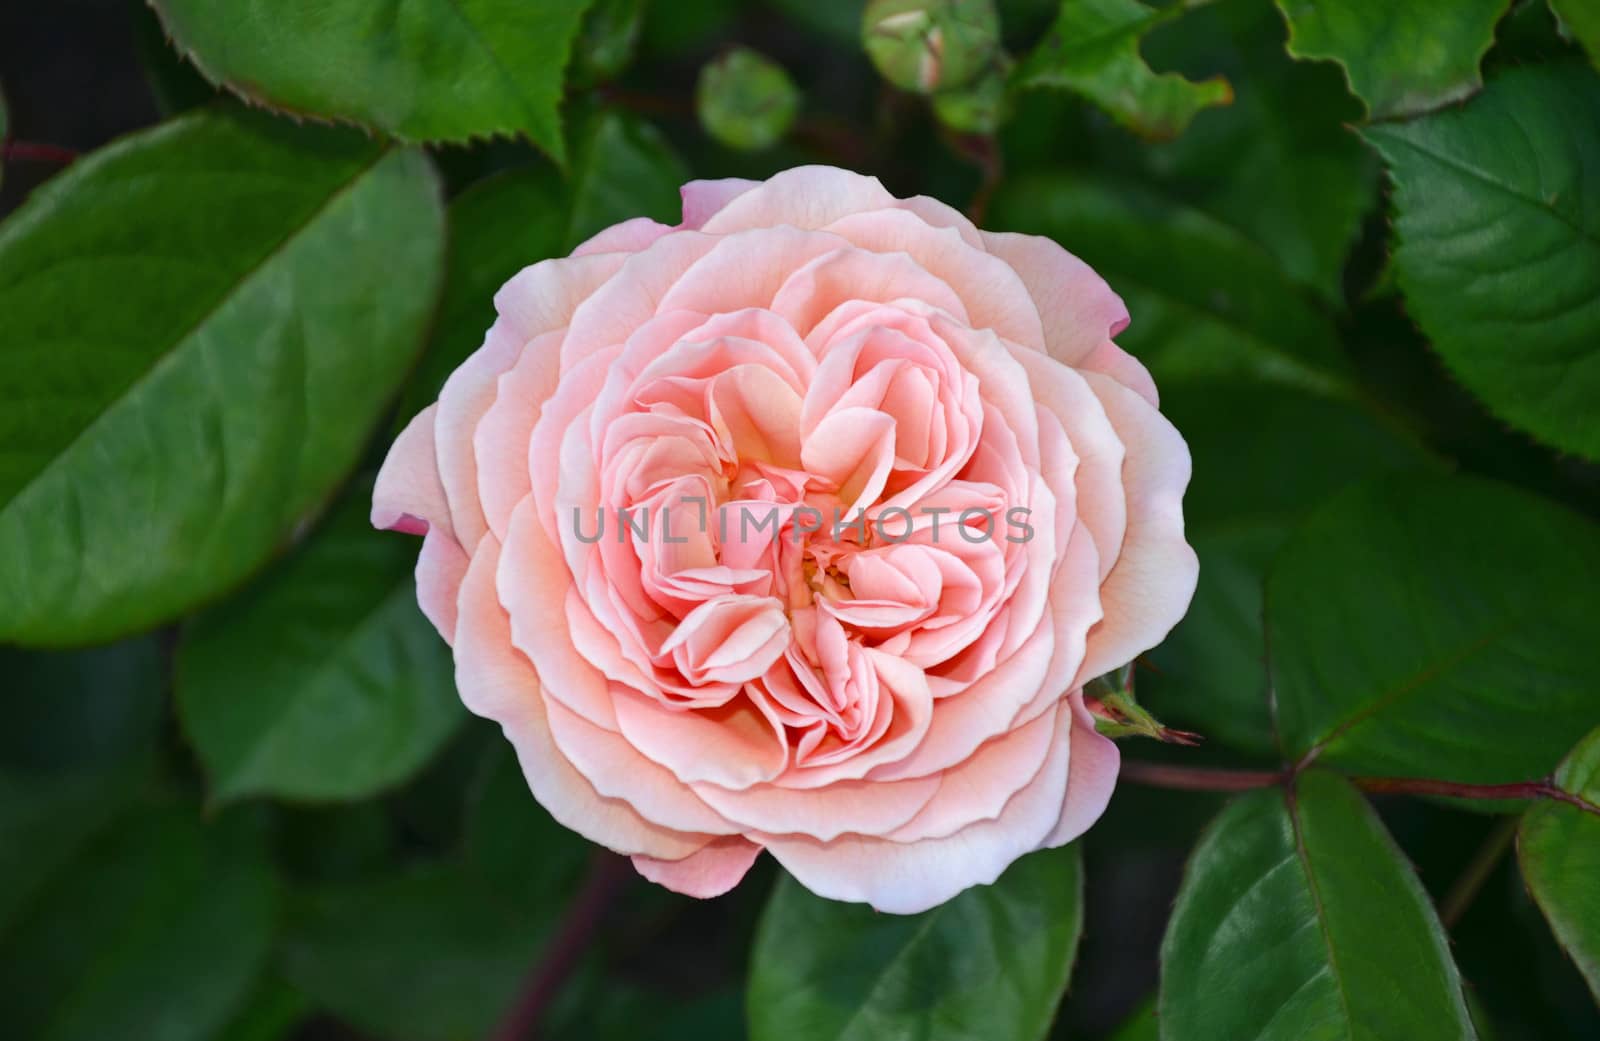 Single pink rose in full bloom against green leaf background